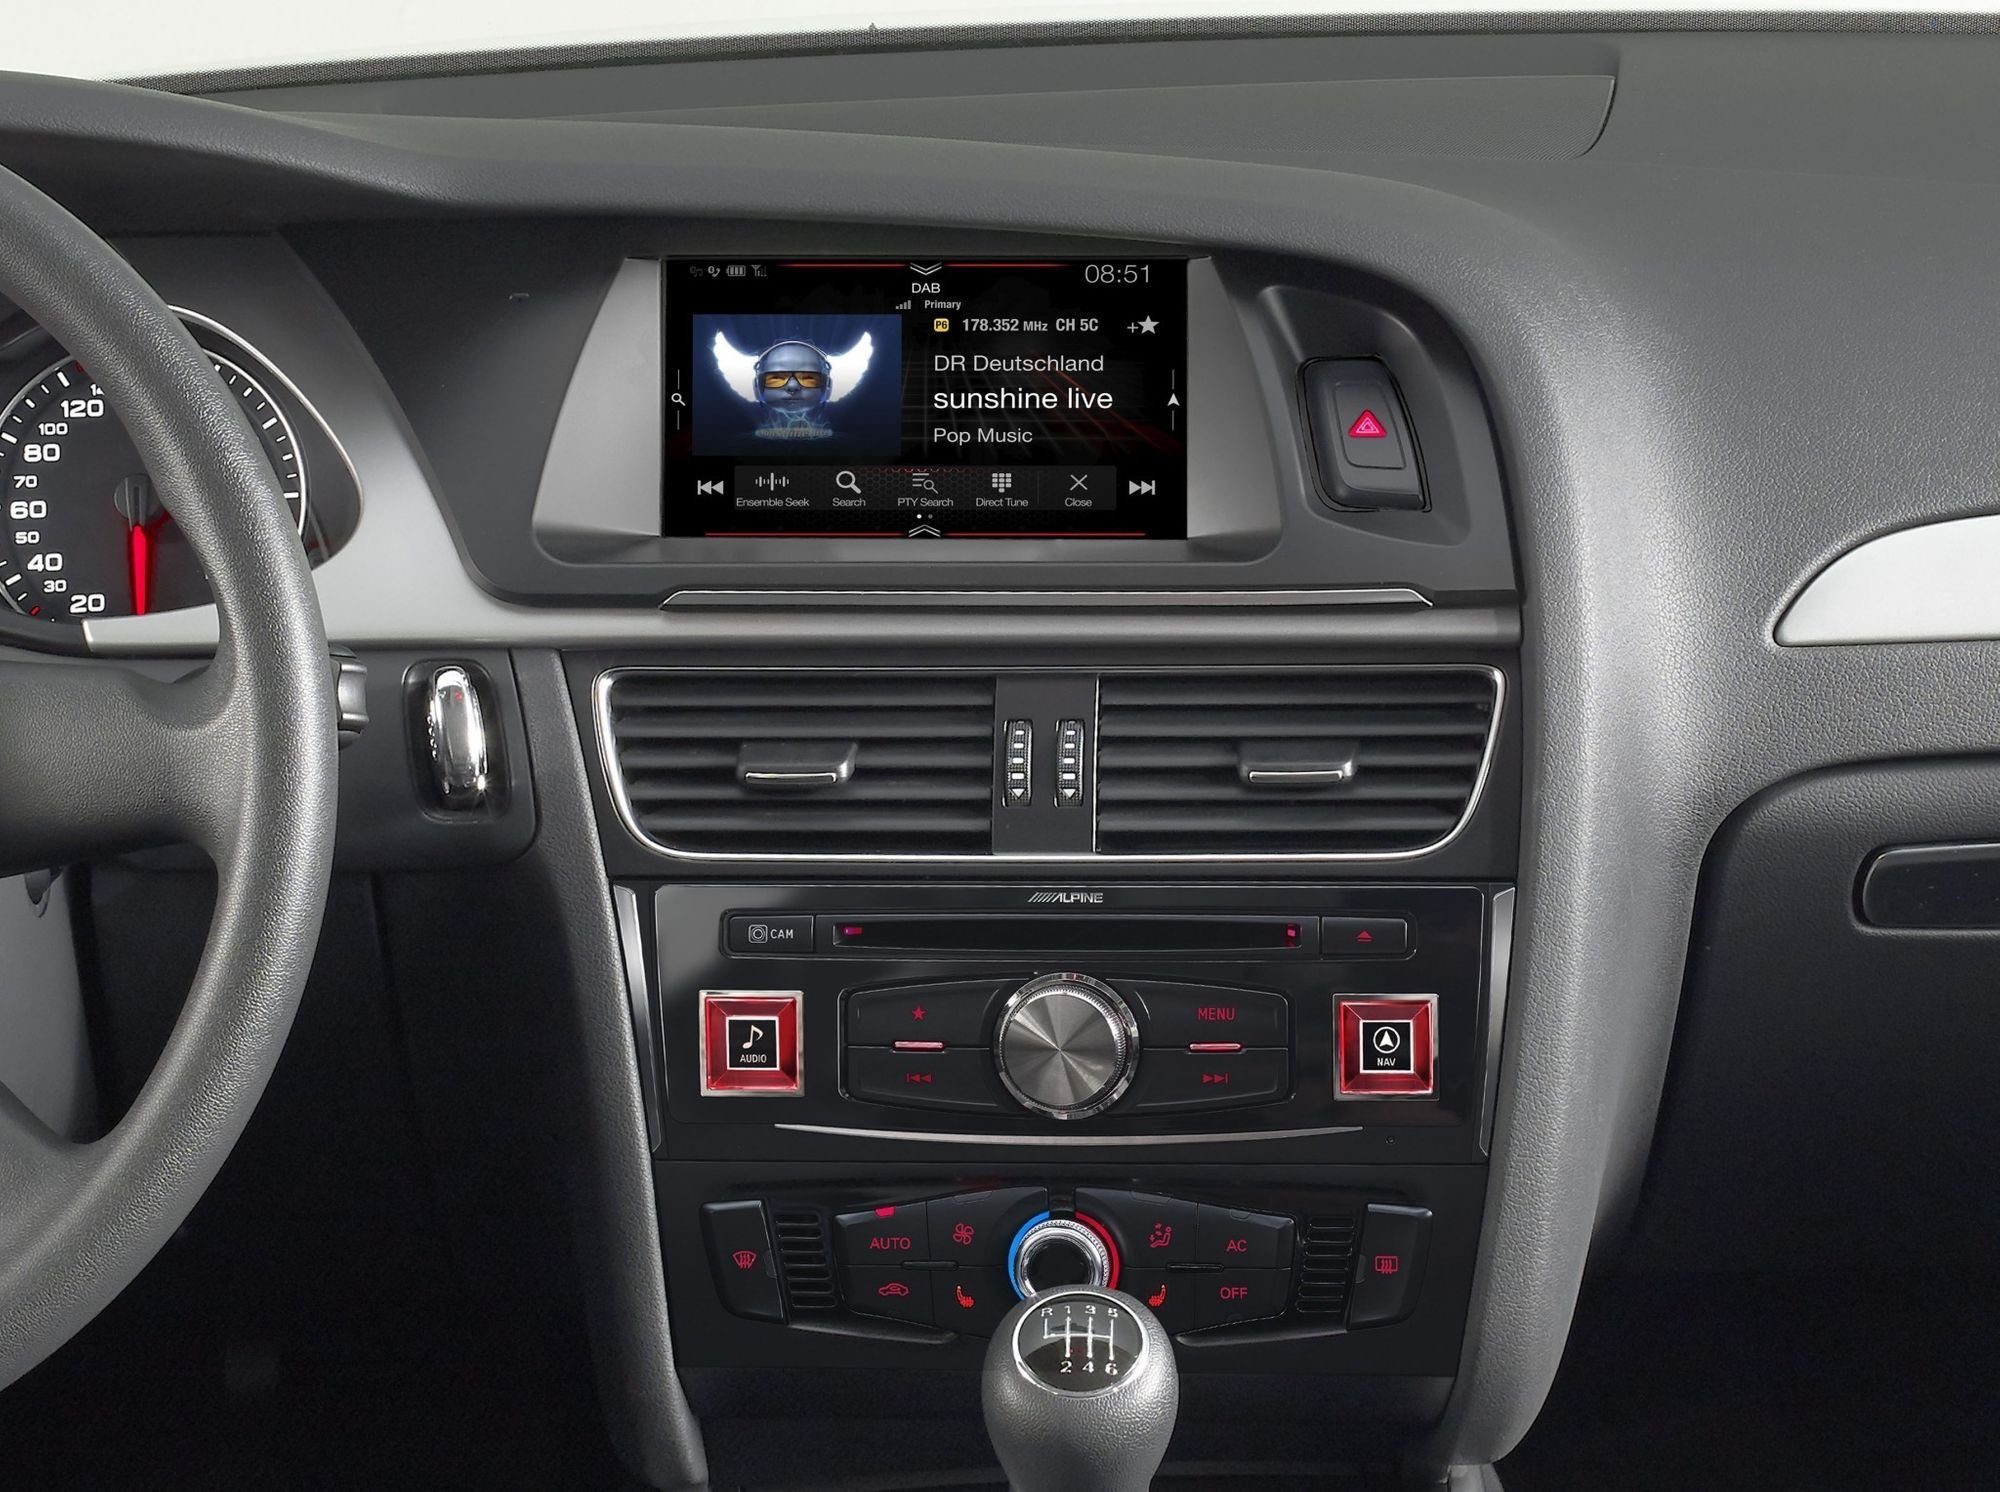 Auto ALPINE Premium-Infotainment-Audi Navi X703D-A4 A4 CarPlay Android Autoradio 7-Zoll